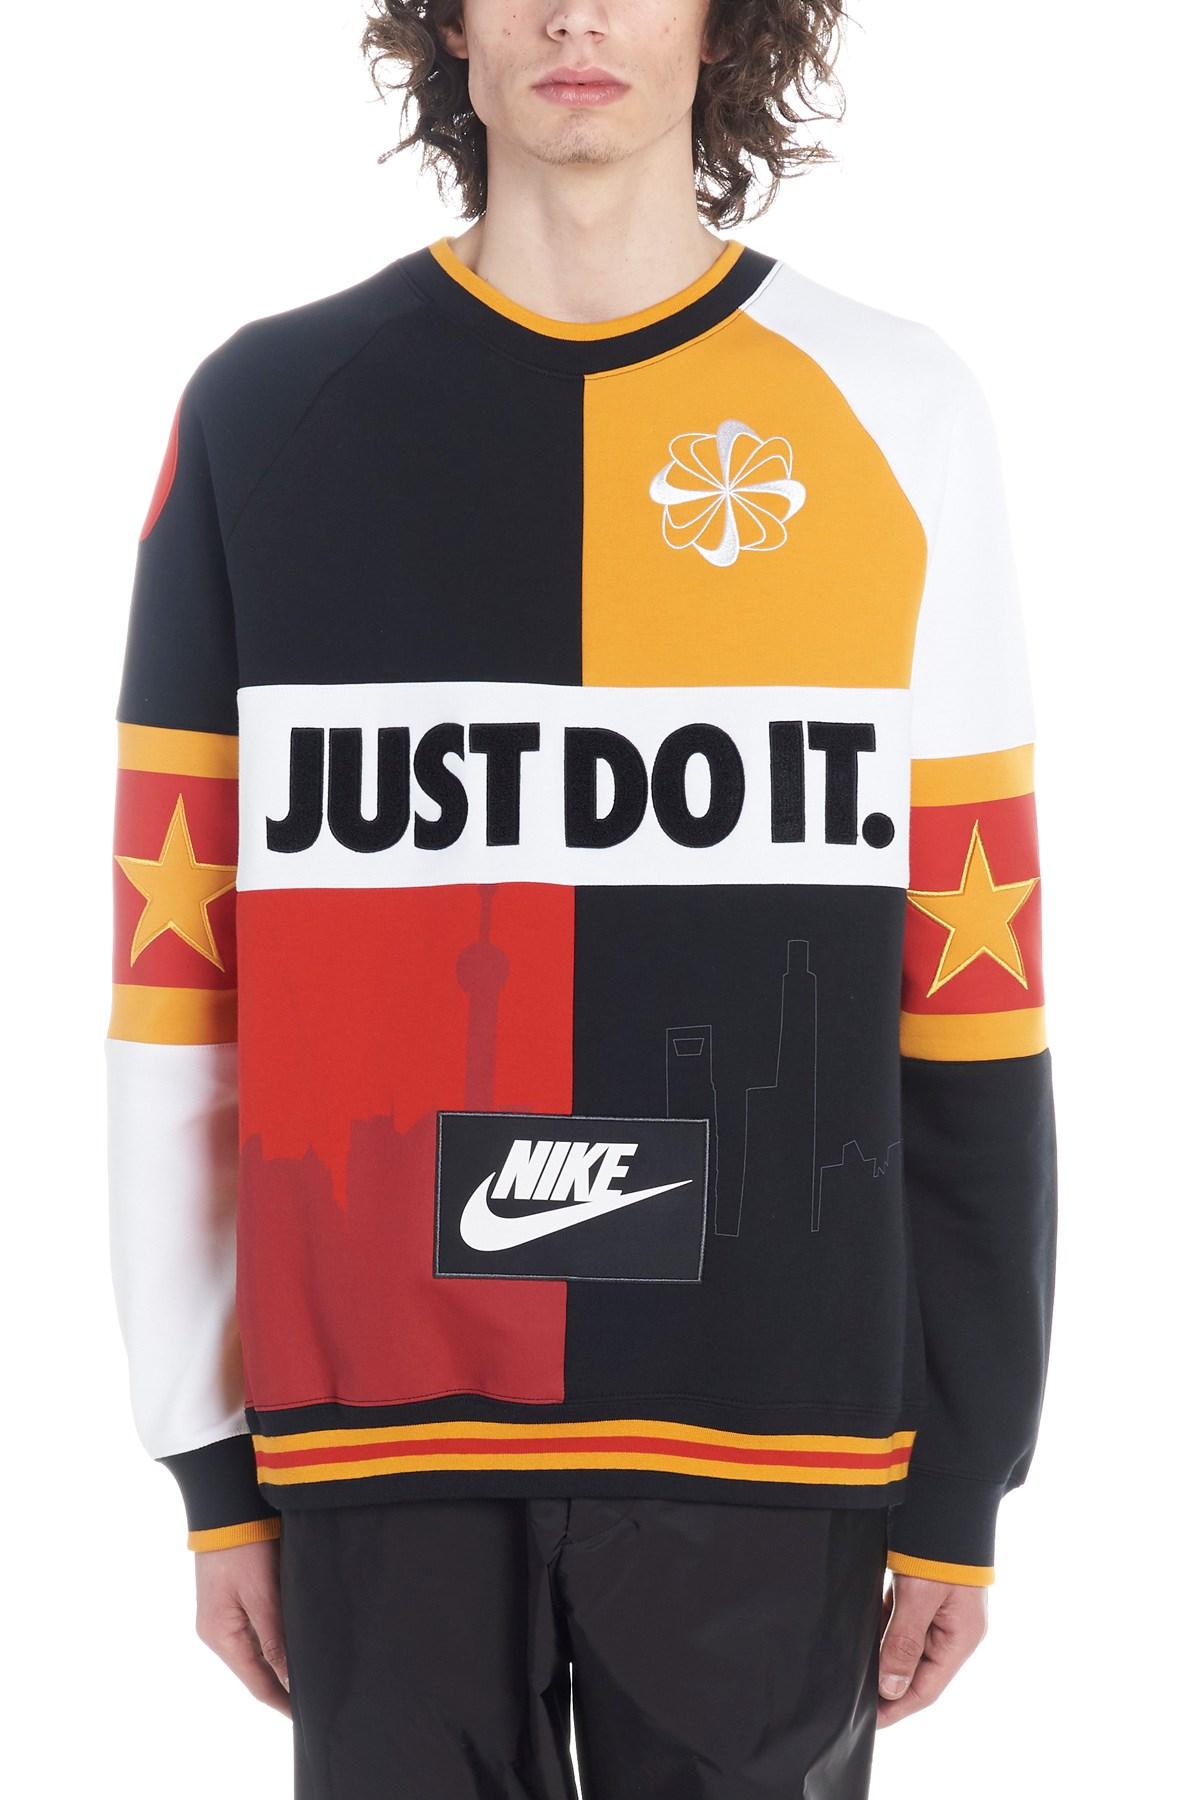 Nike Cotton Shanghai Crewneck Sweatshirt Black/canyon Gold for Men - Lyst